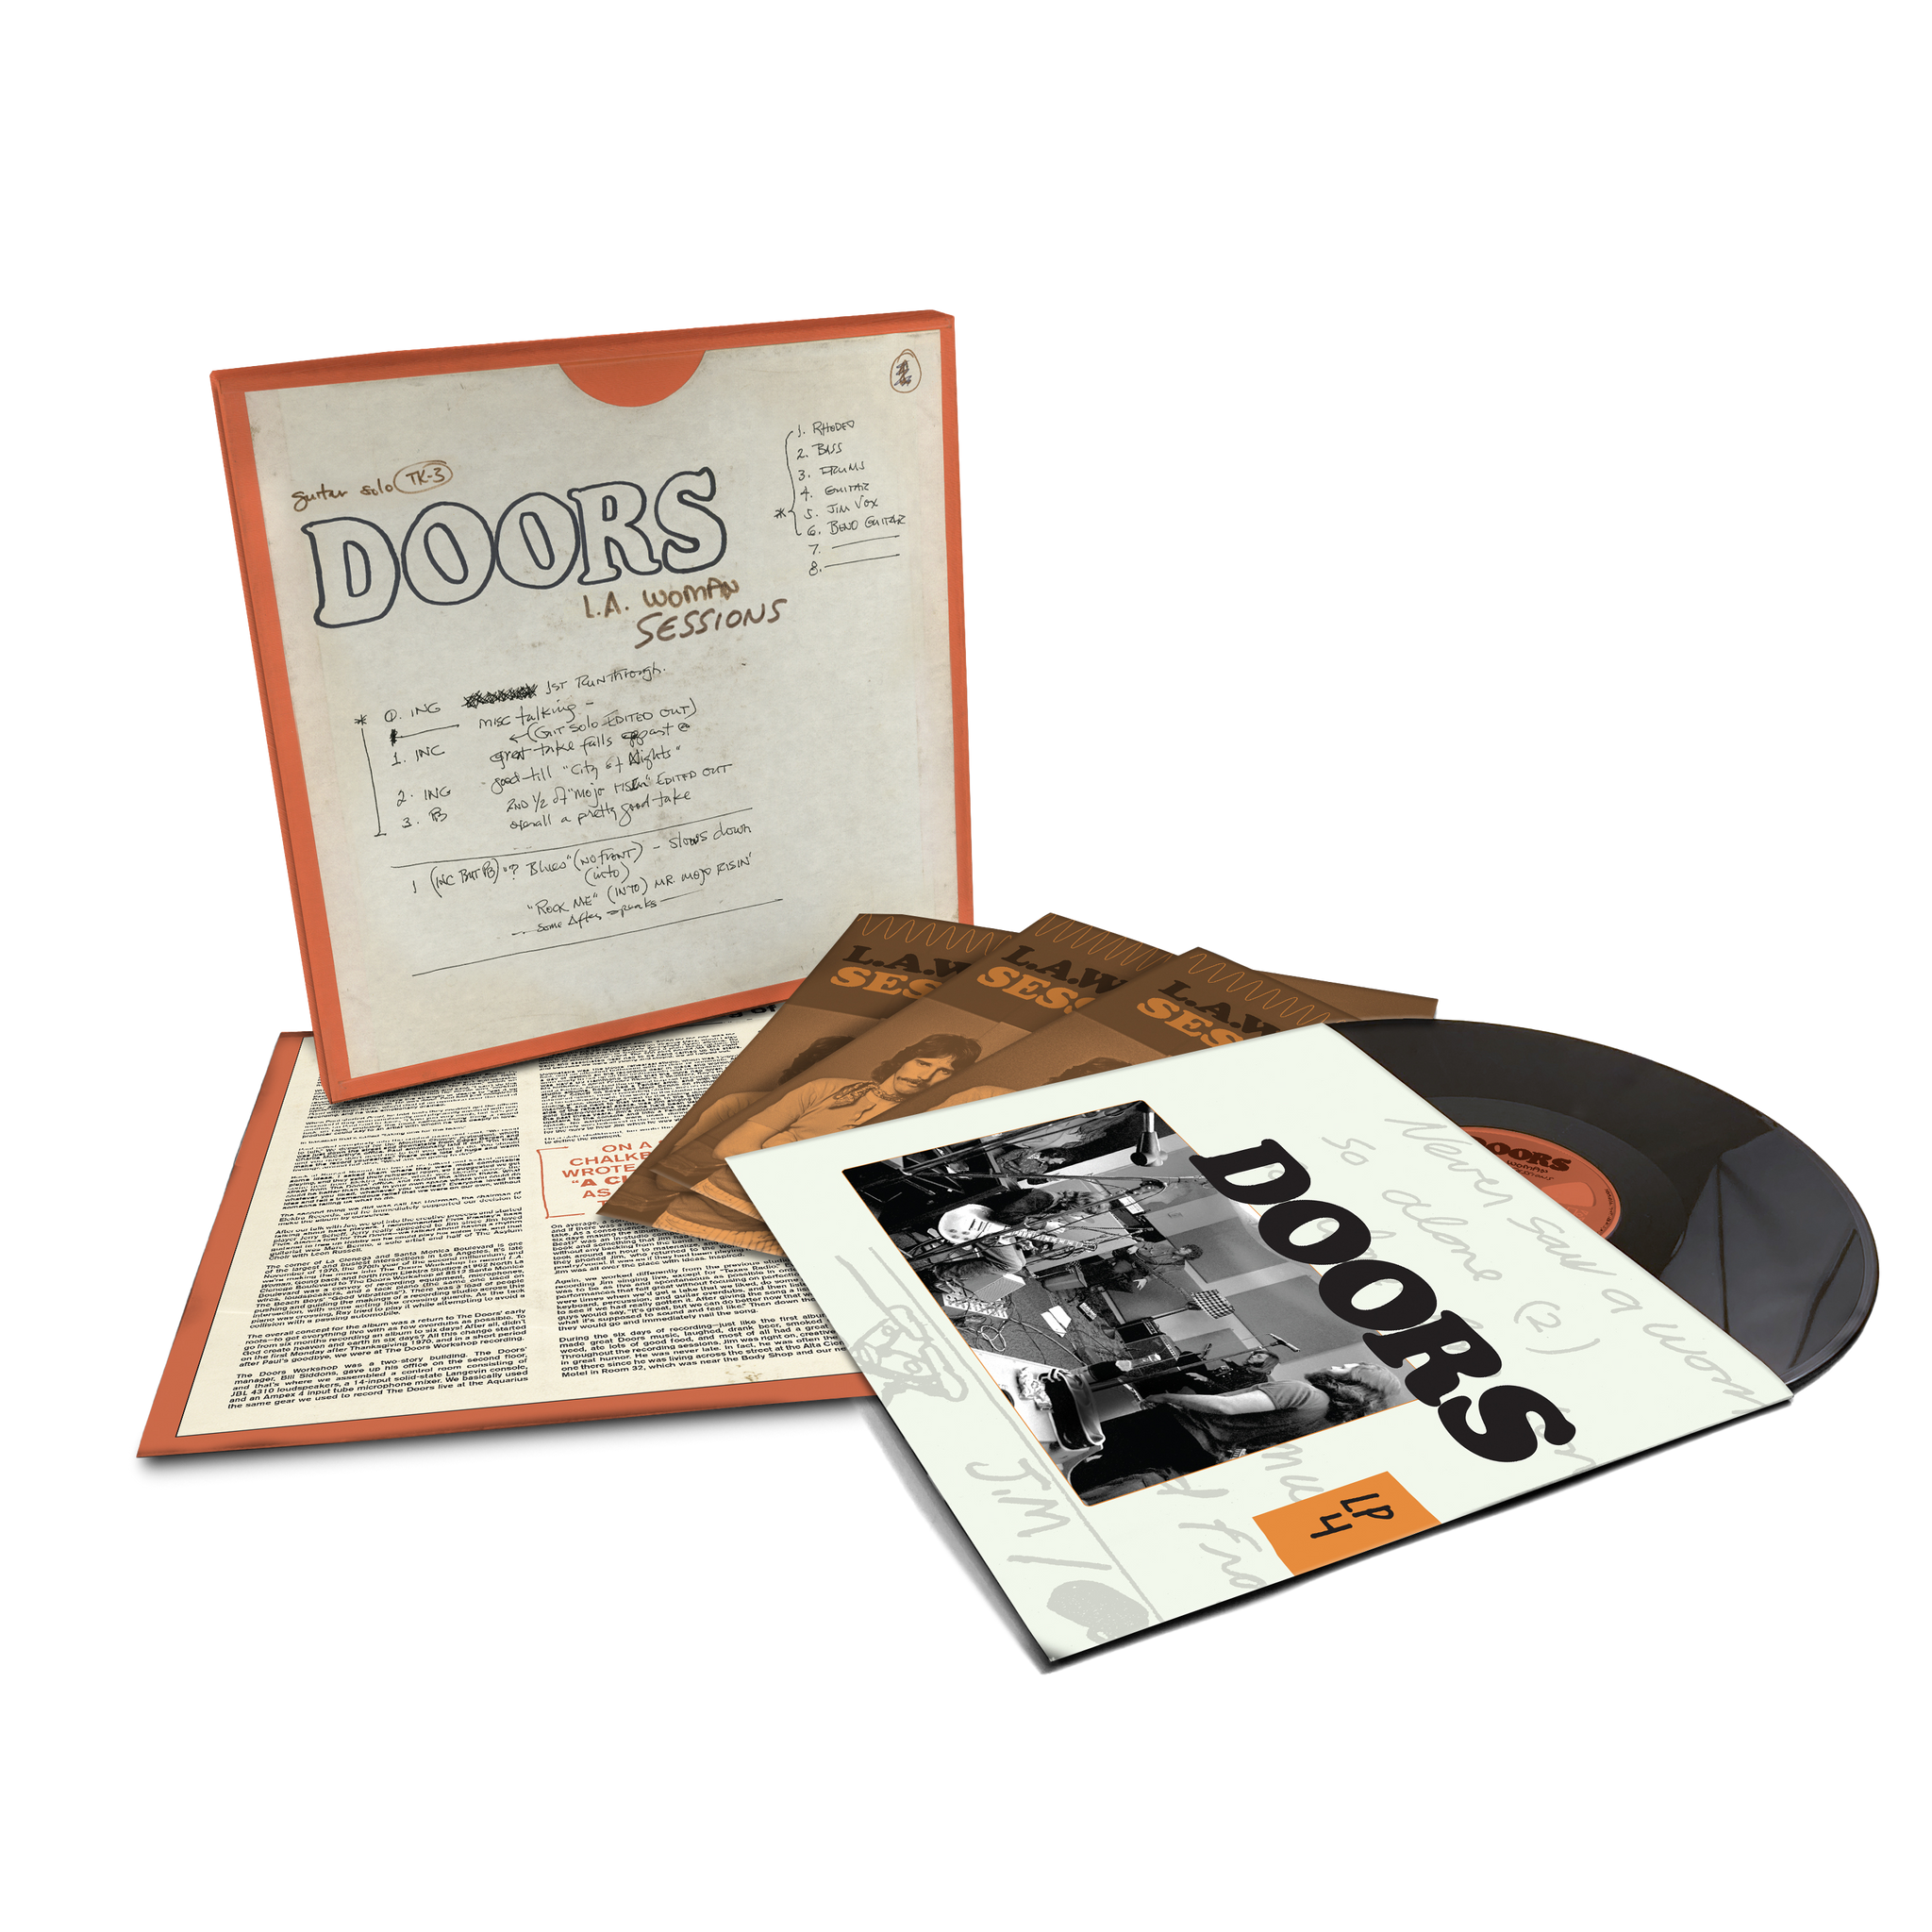 L.A. WOMAN SESSIONS [4 LP SET] - RSD 2022 - The Doors Official